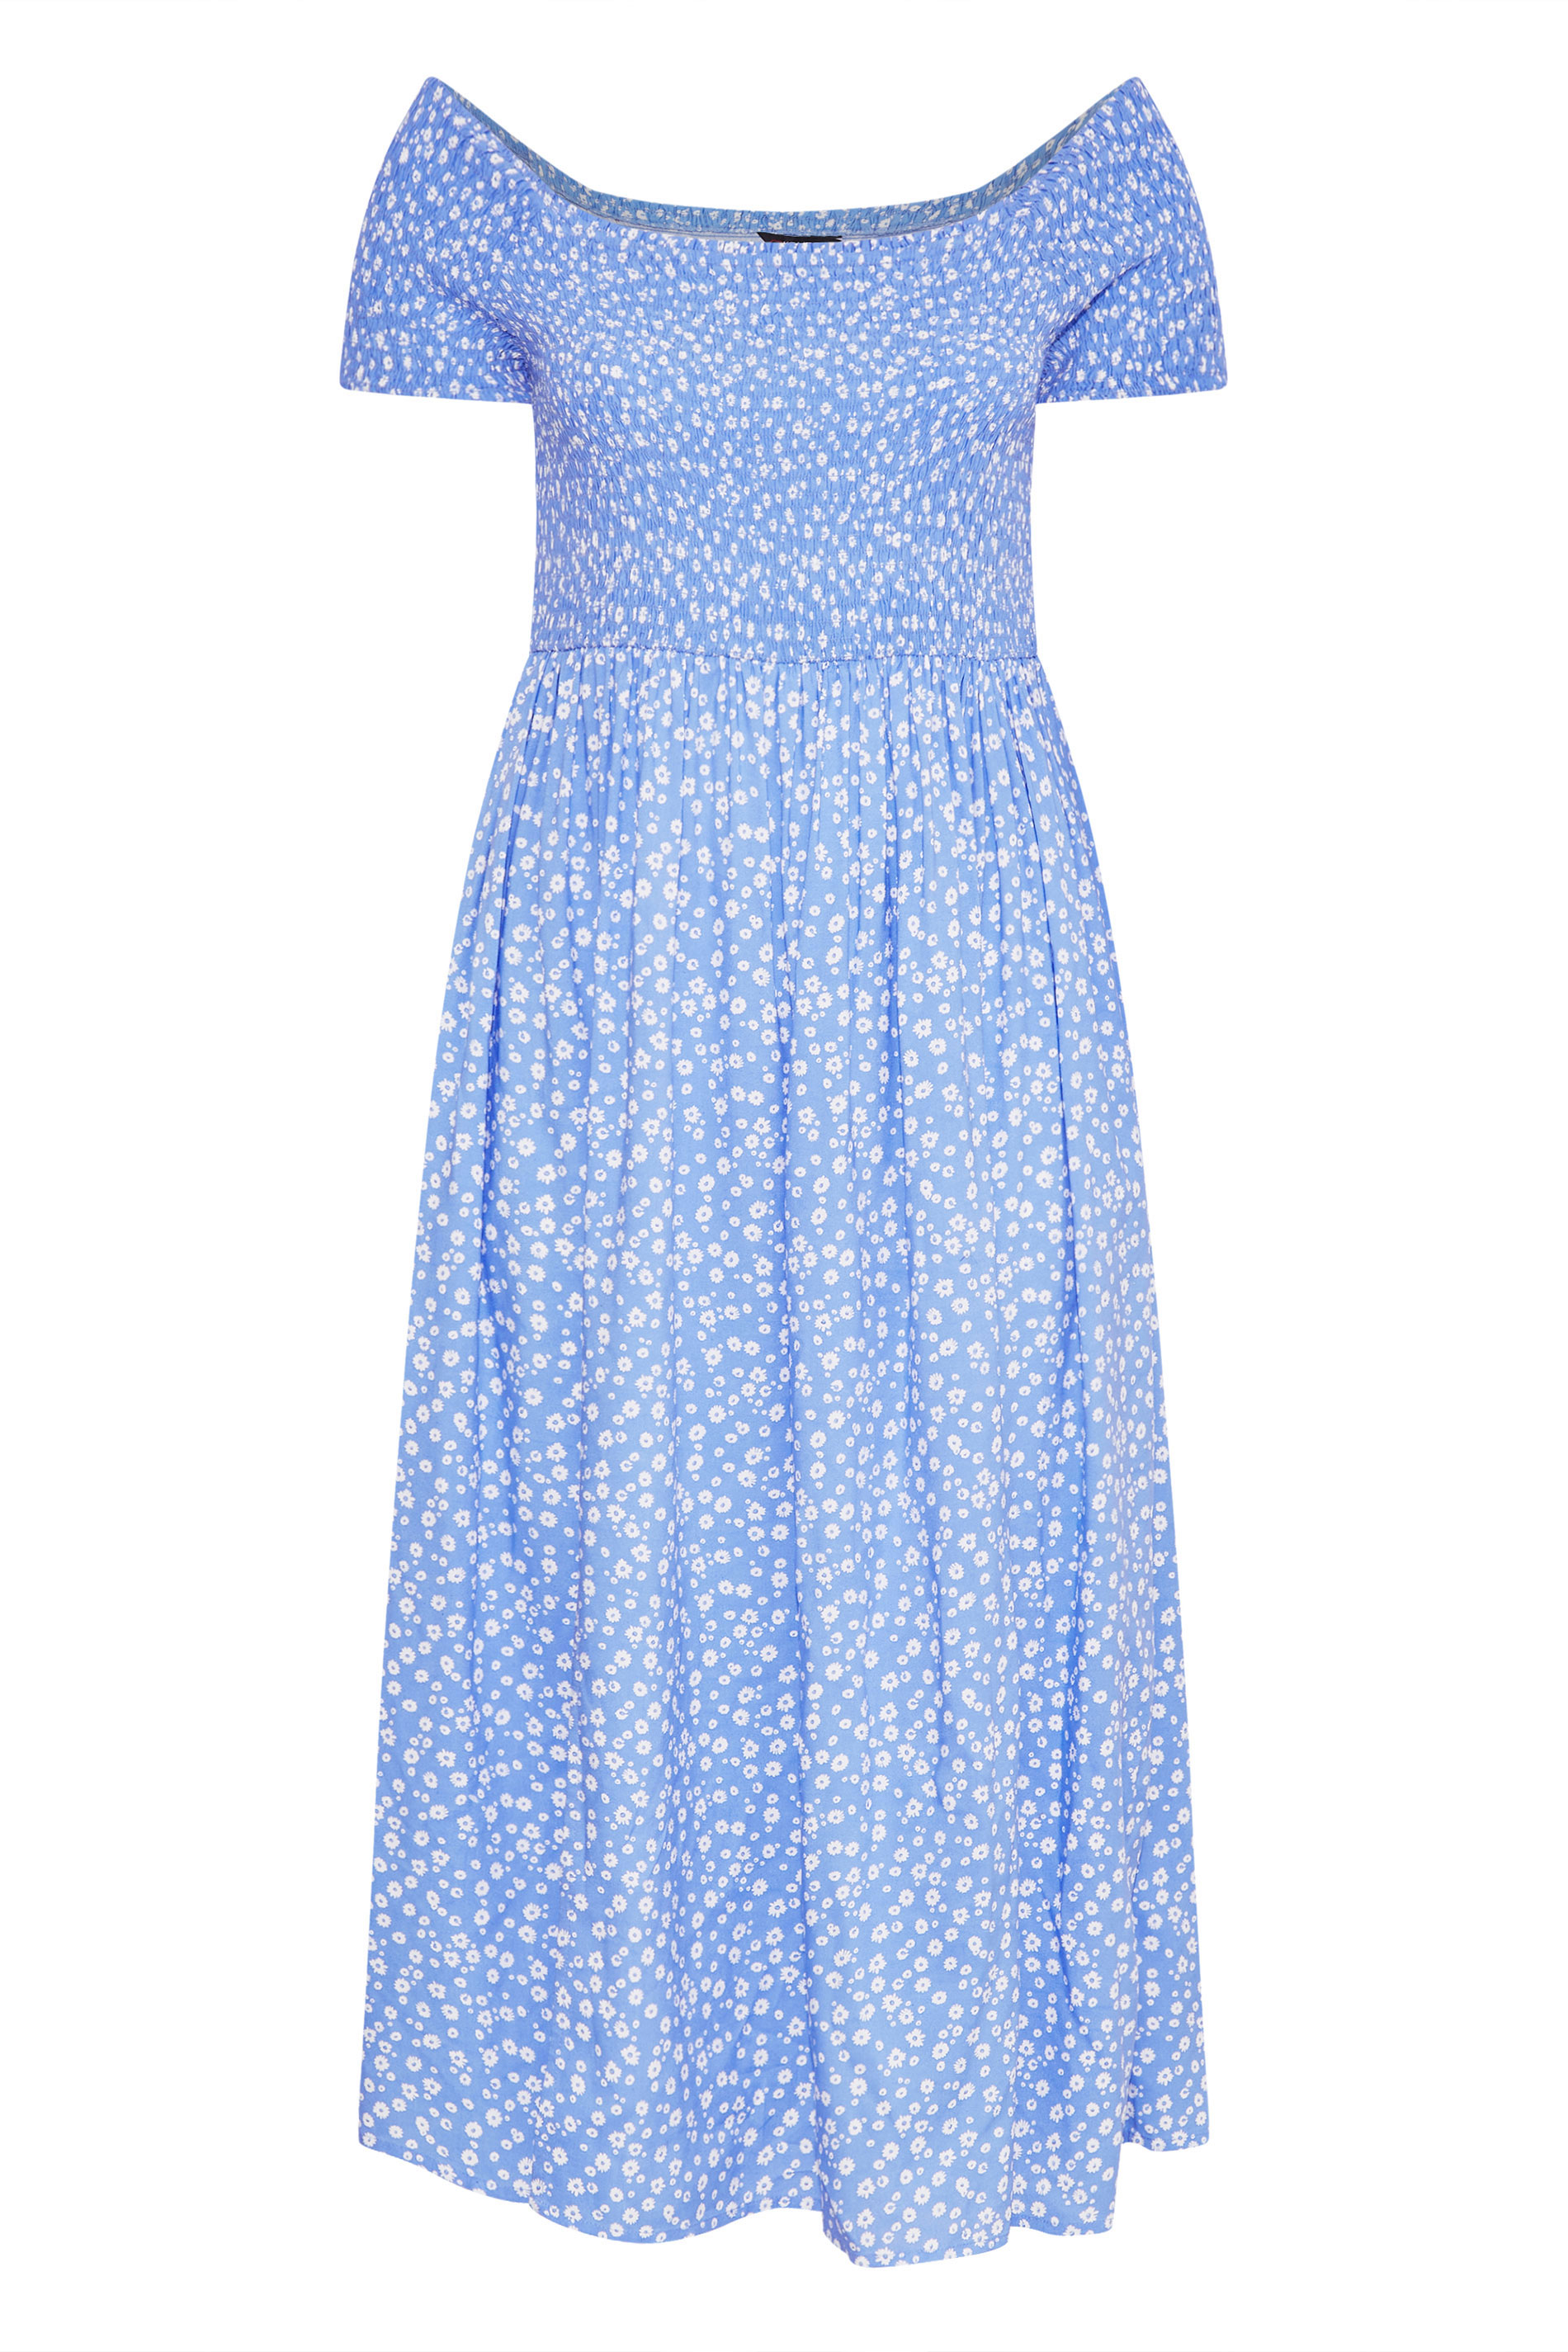 Robes Grande Taille Grande taille  Robes Style Bardot | Robe Bleue Ciel Floral en Bardot Manches Courtes - FE99421